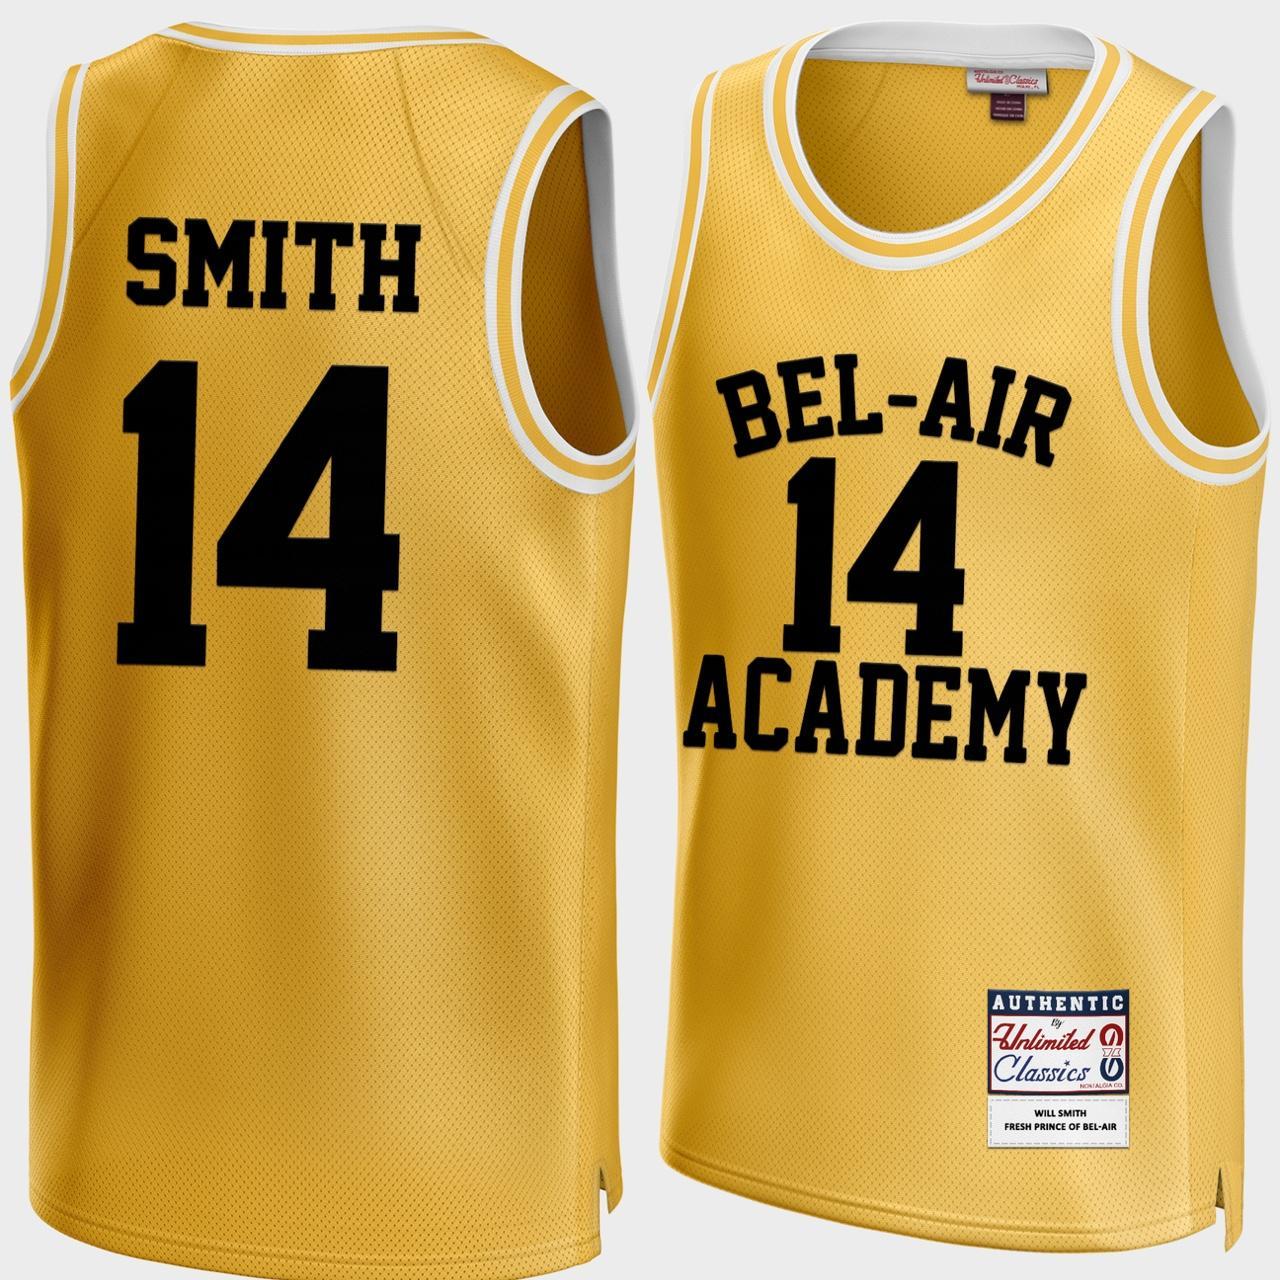 Headgear Classics Will Smith Gold Bel-Air Academy Jersey